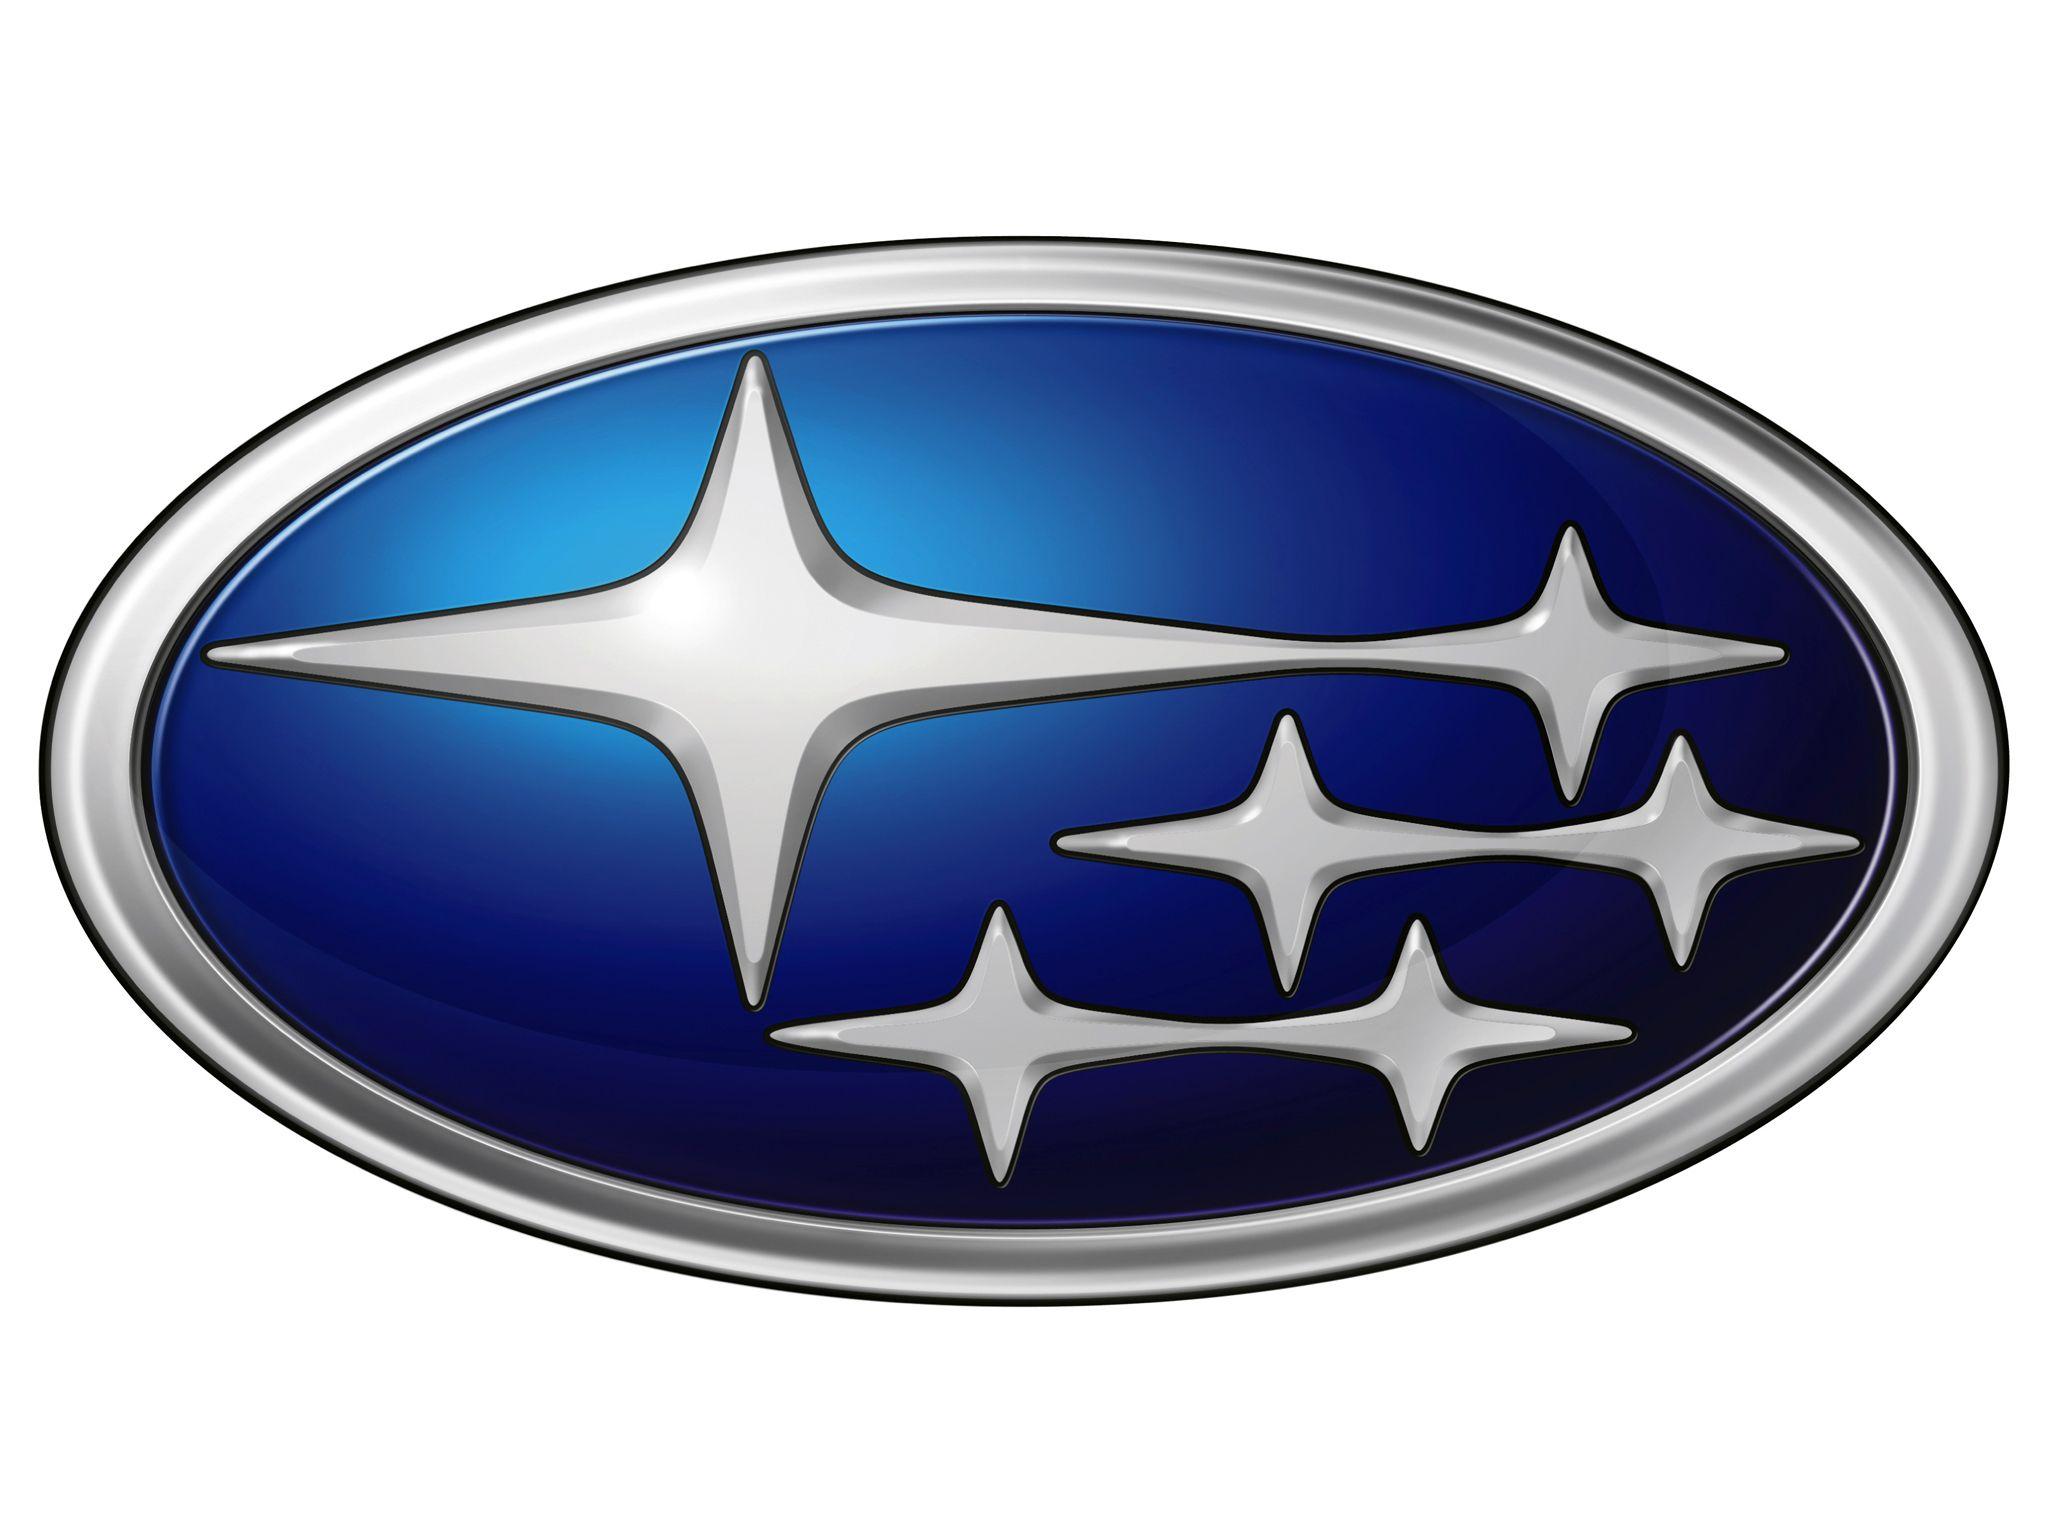 Logos For > Subaru Emblem Wallpaper